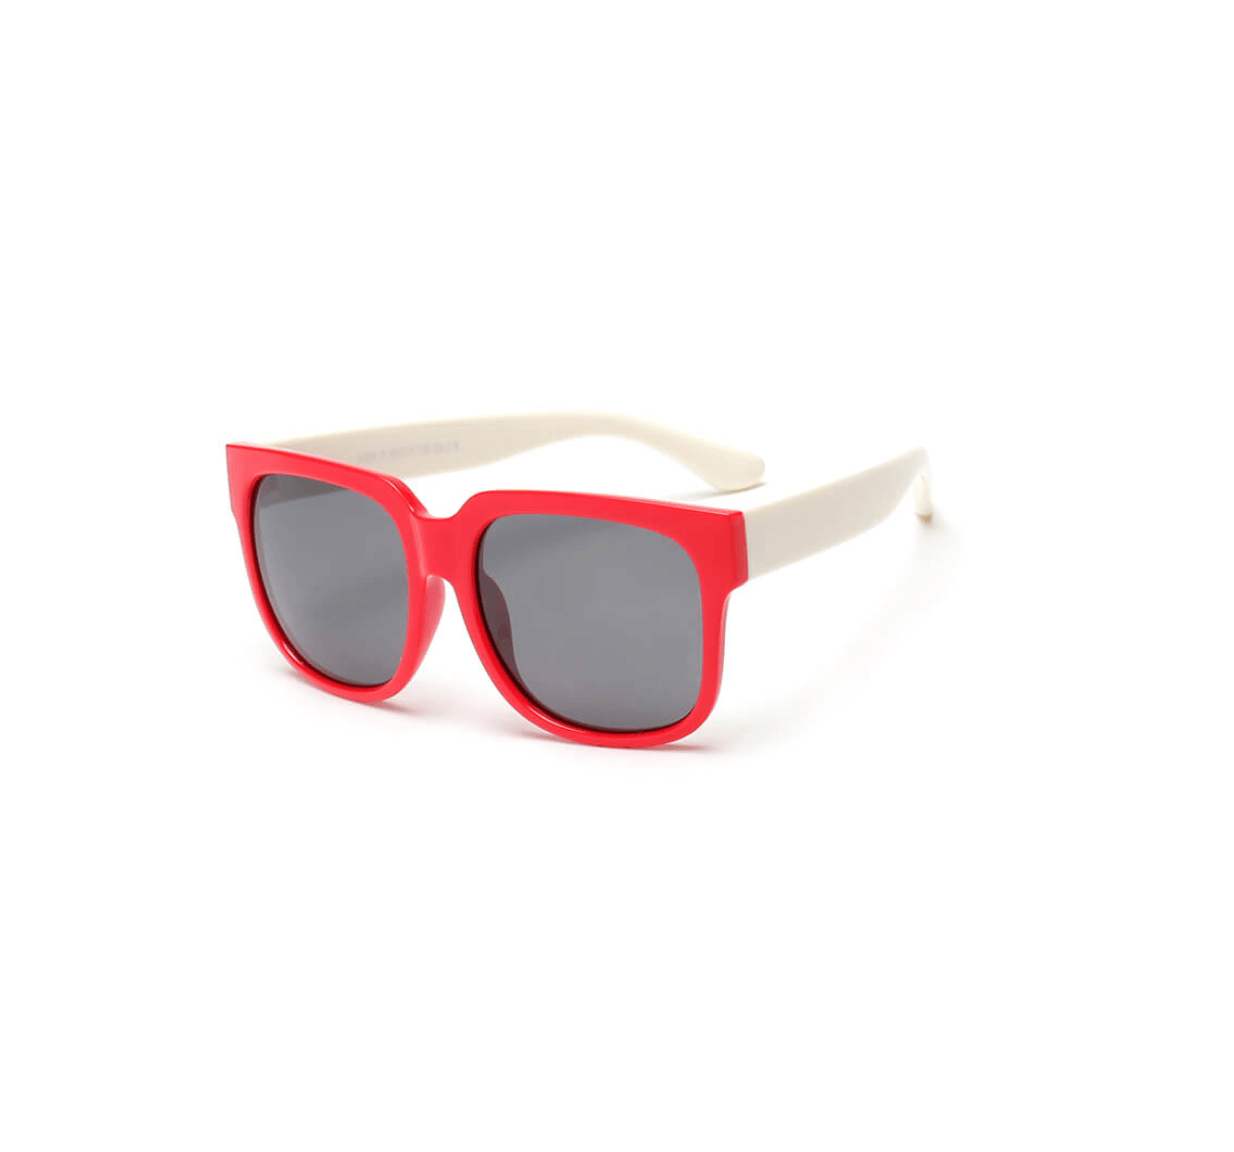 wholesale sunglasses polarized, red square children sunglasses, polarized sunglass lenses wholesale, bulk polarized sunglasses, China sunglasses supplier